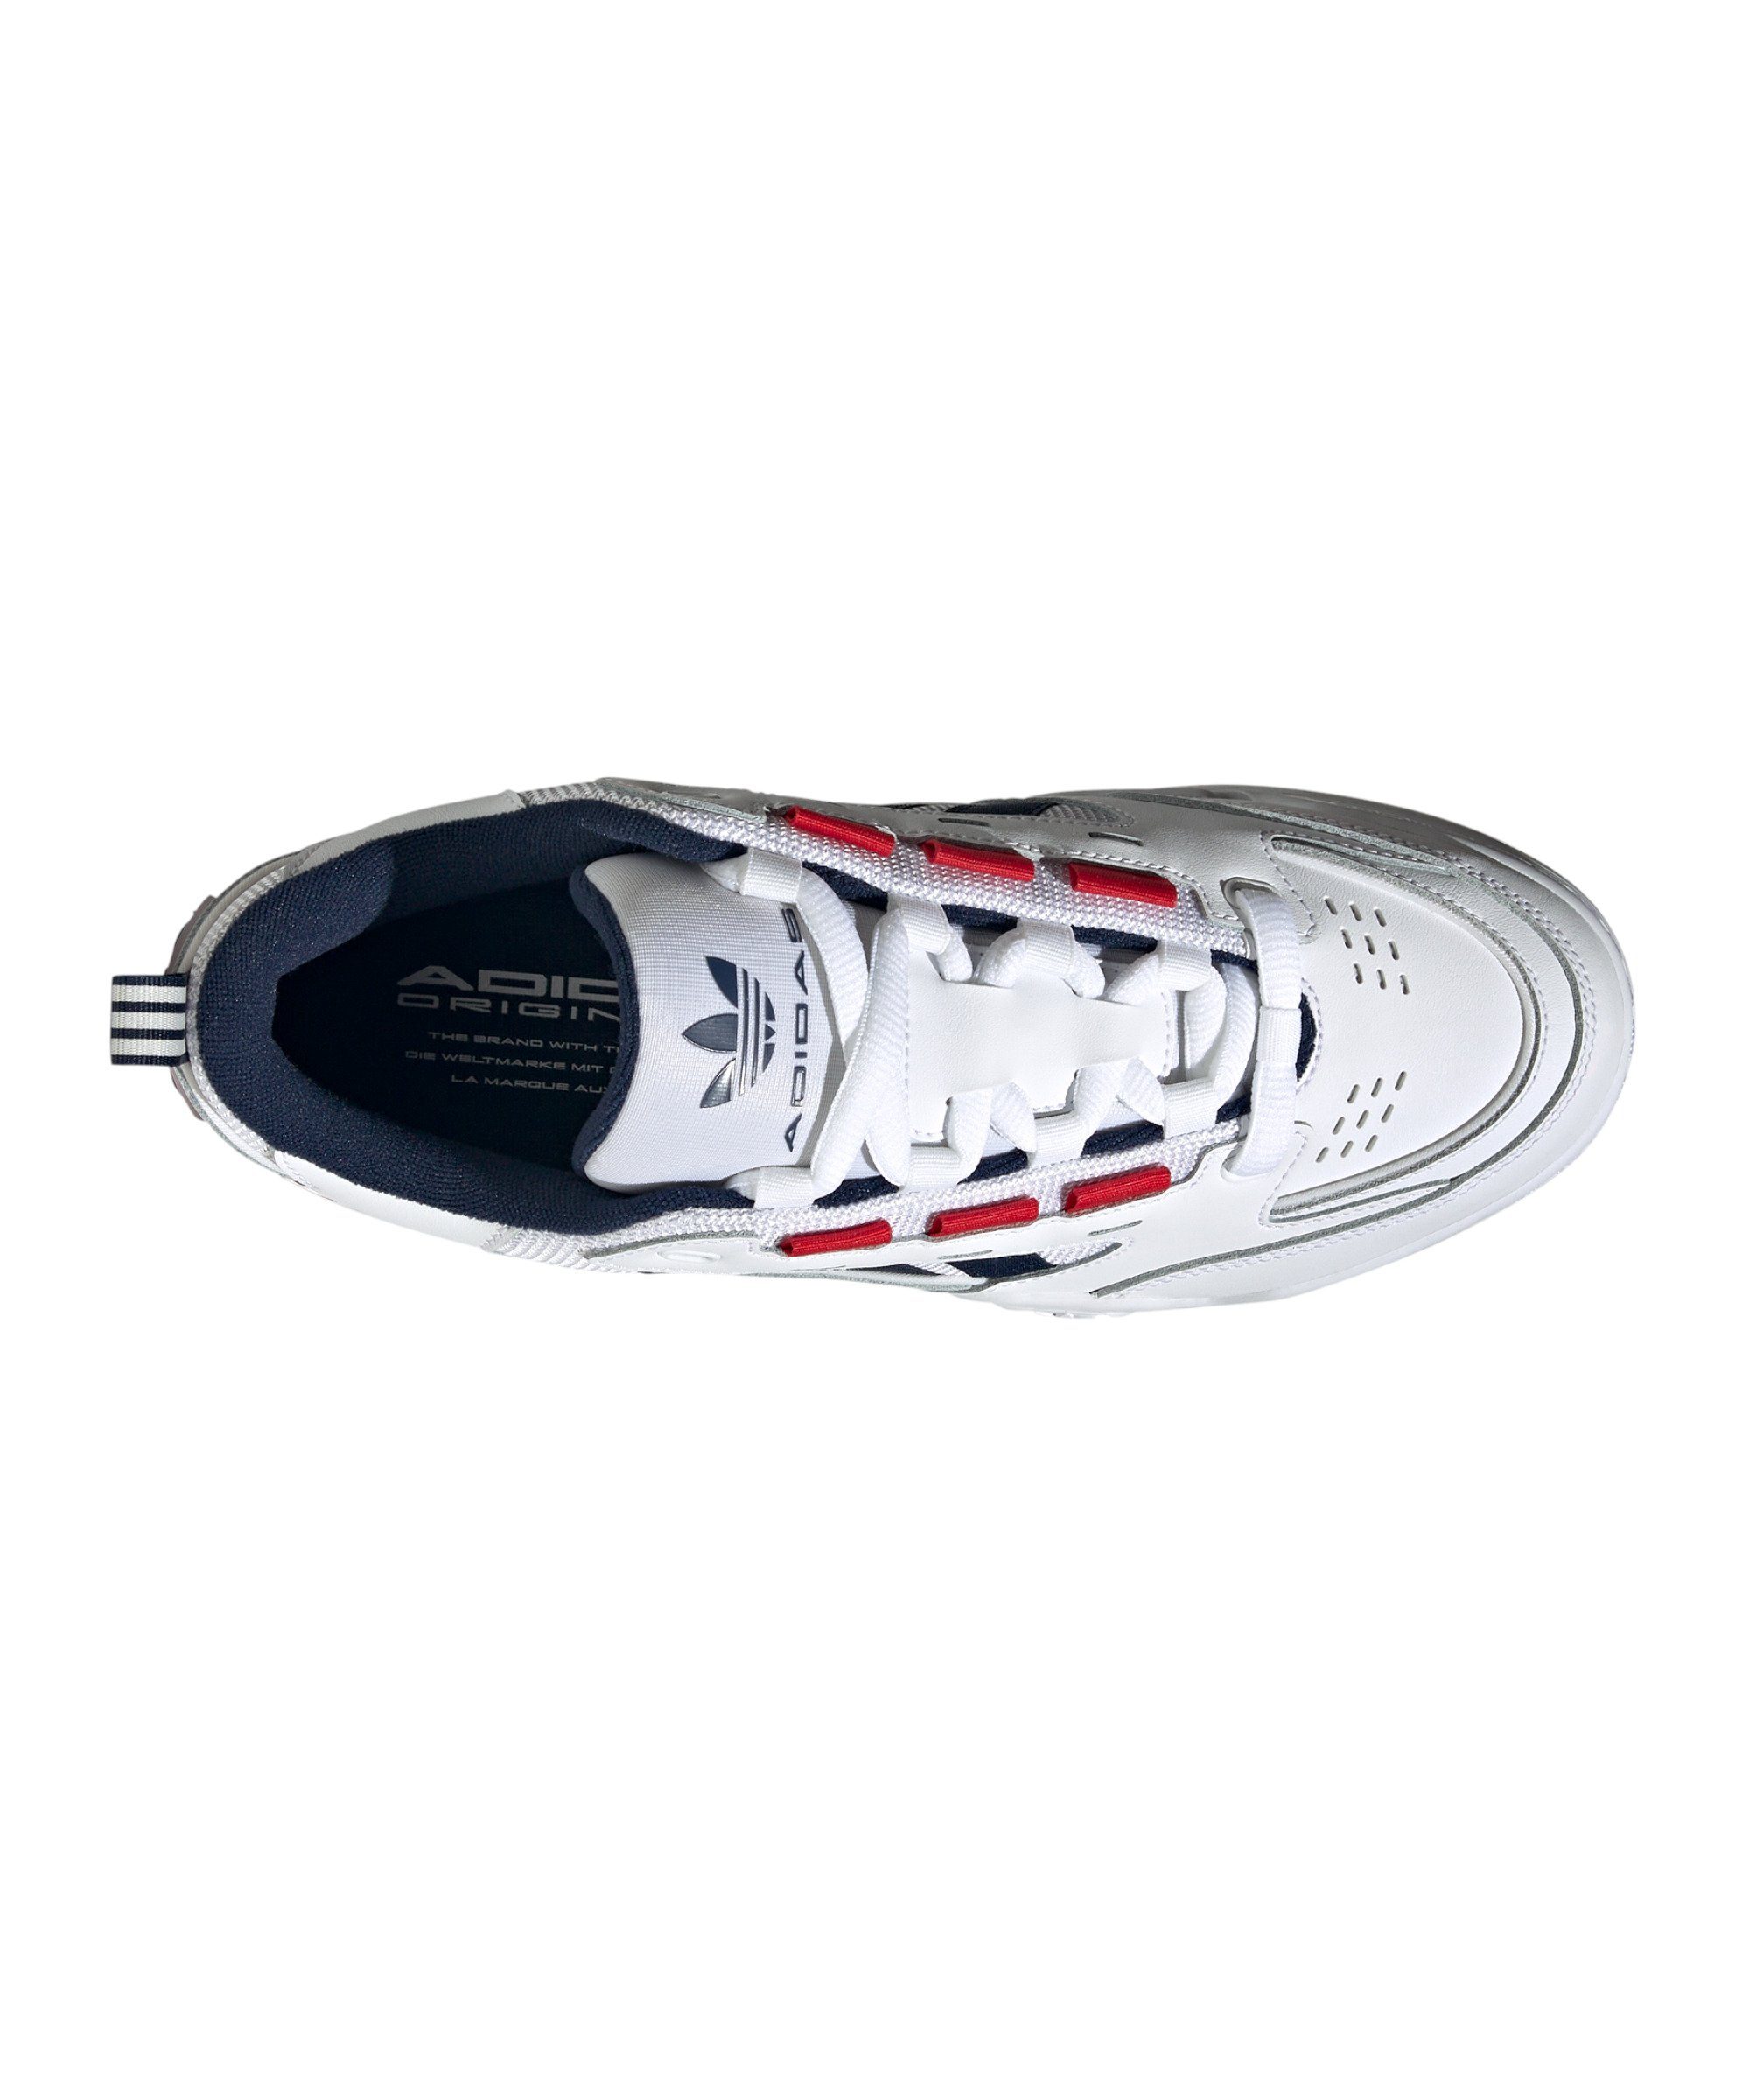 Sneaker Originals weissblaurot Adi2000 adidas